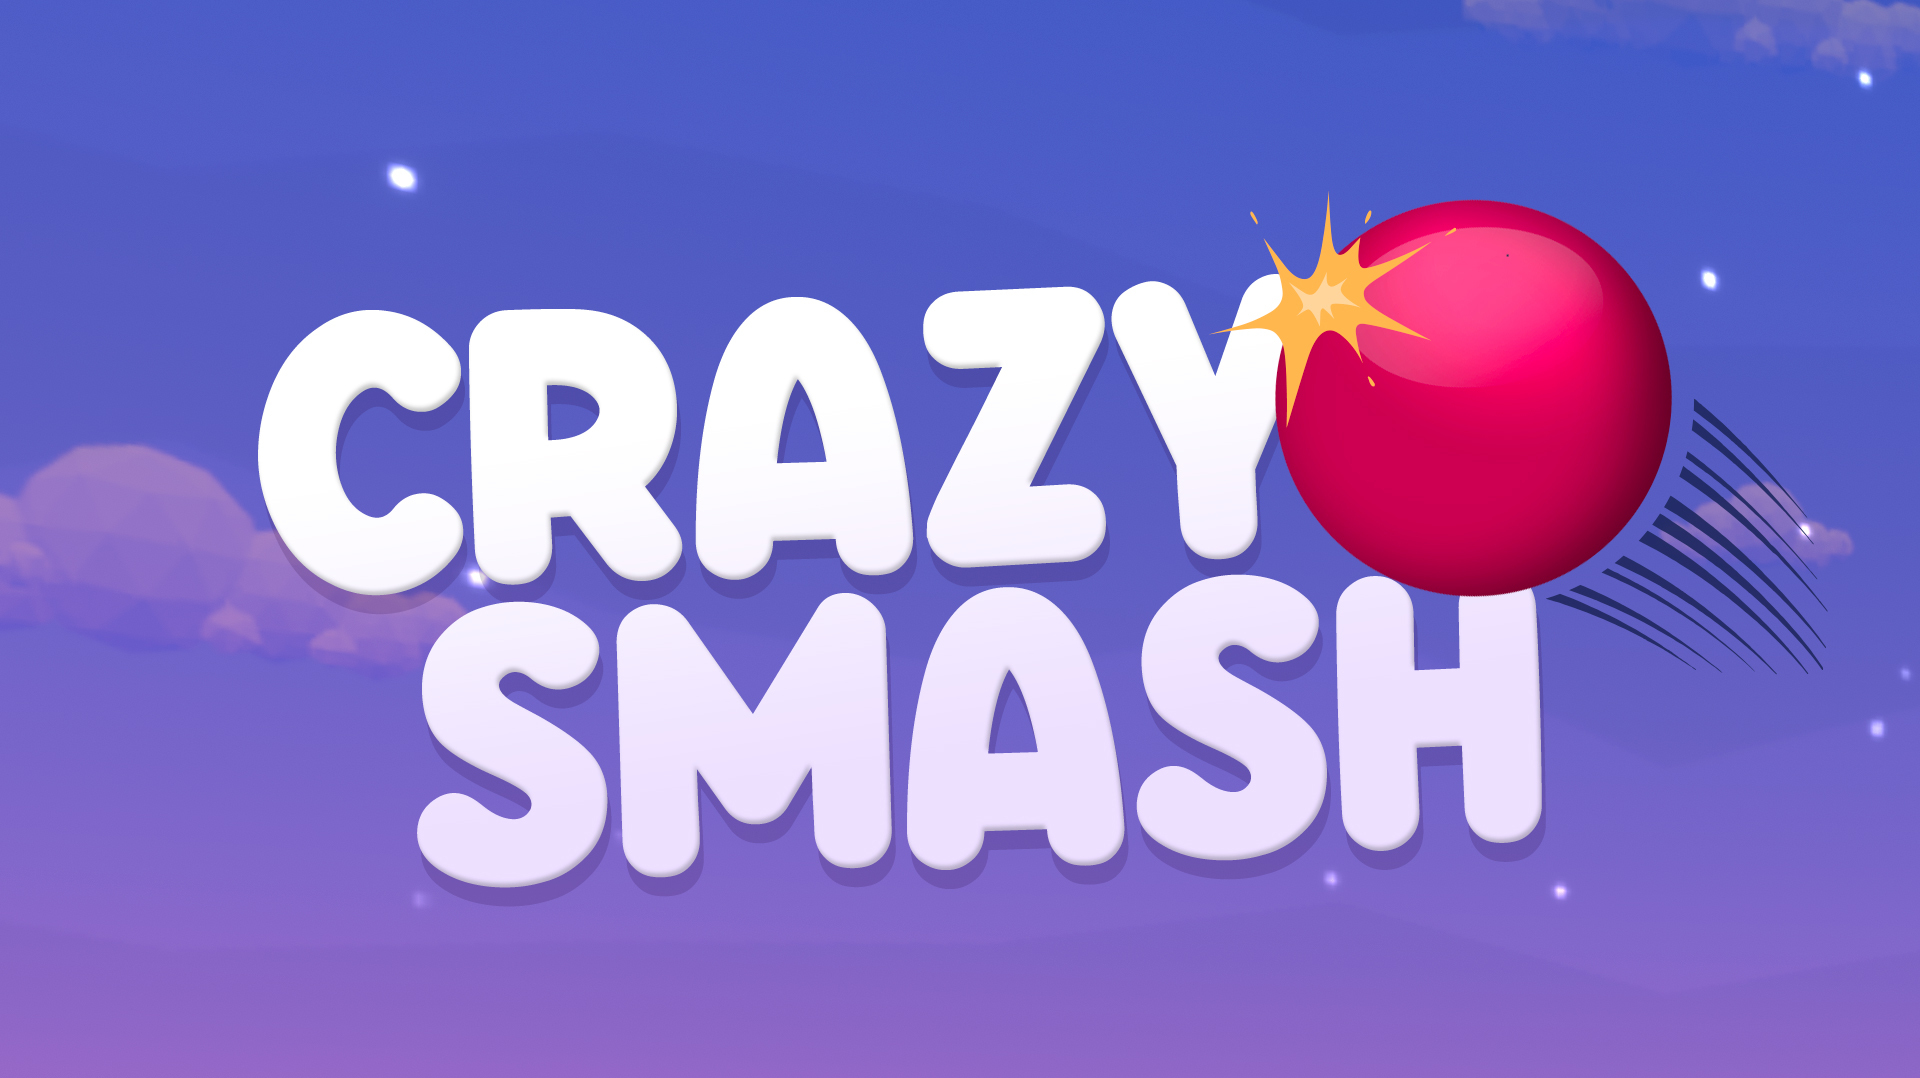 Crazy Smash Game Image